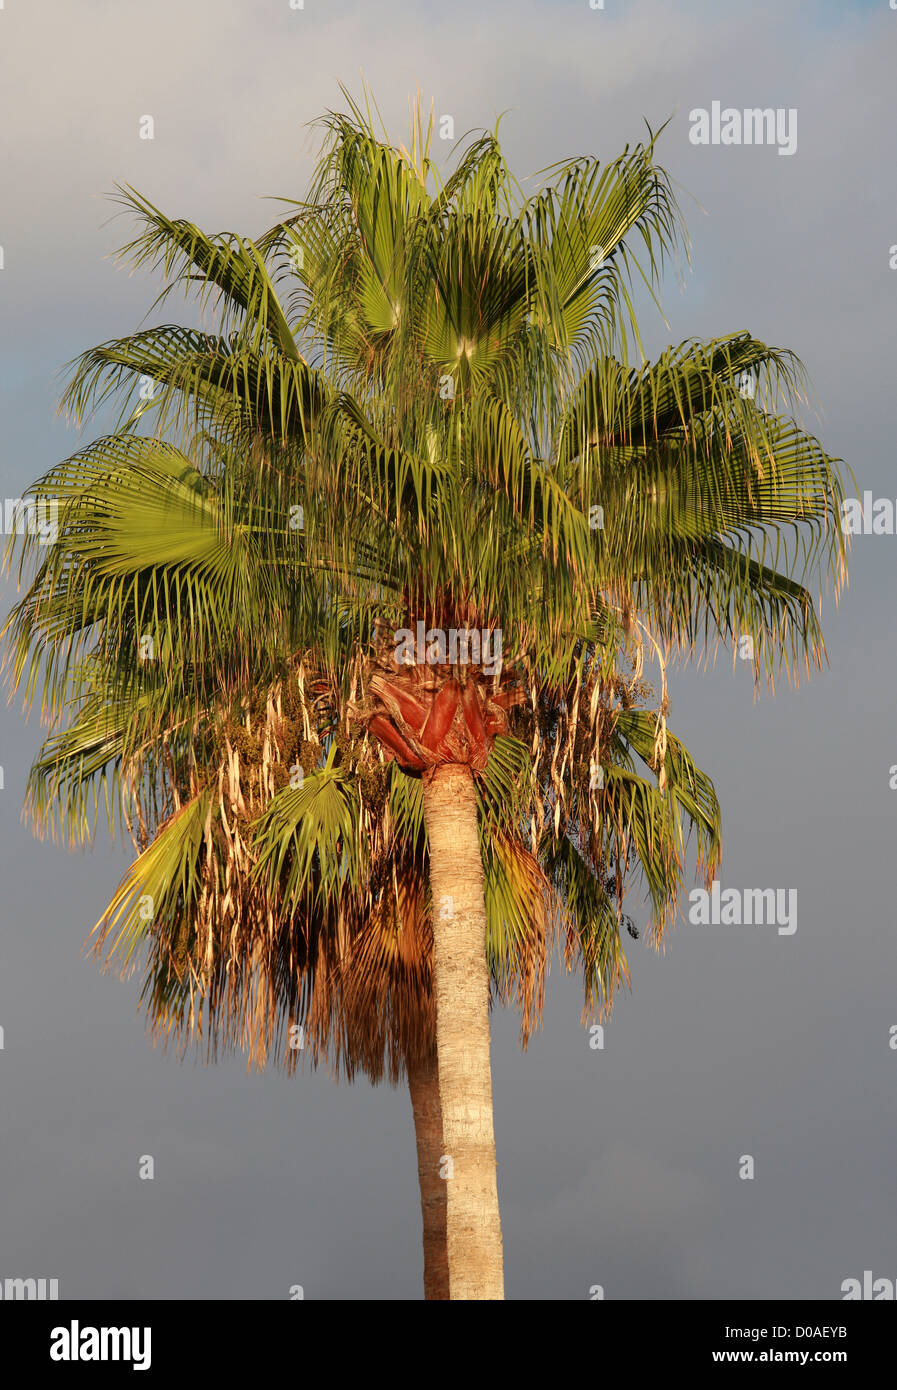 Ventola cinese Palm, Fontana cinese Palm, Serdang Palm, Livistonia chinensis Arecaceae, Palmae. Tenerife, Isole Canarie, Spagna. Foto Stock